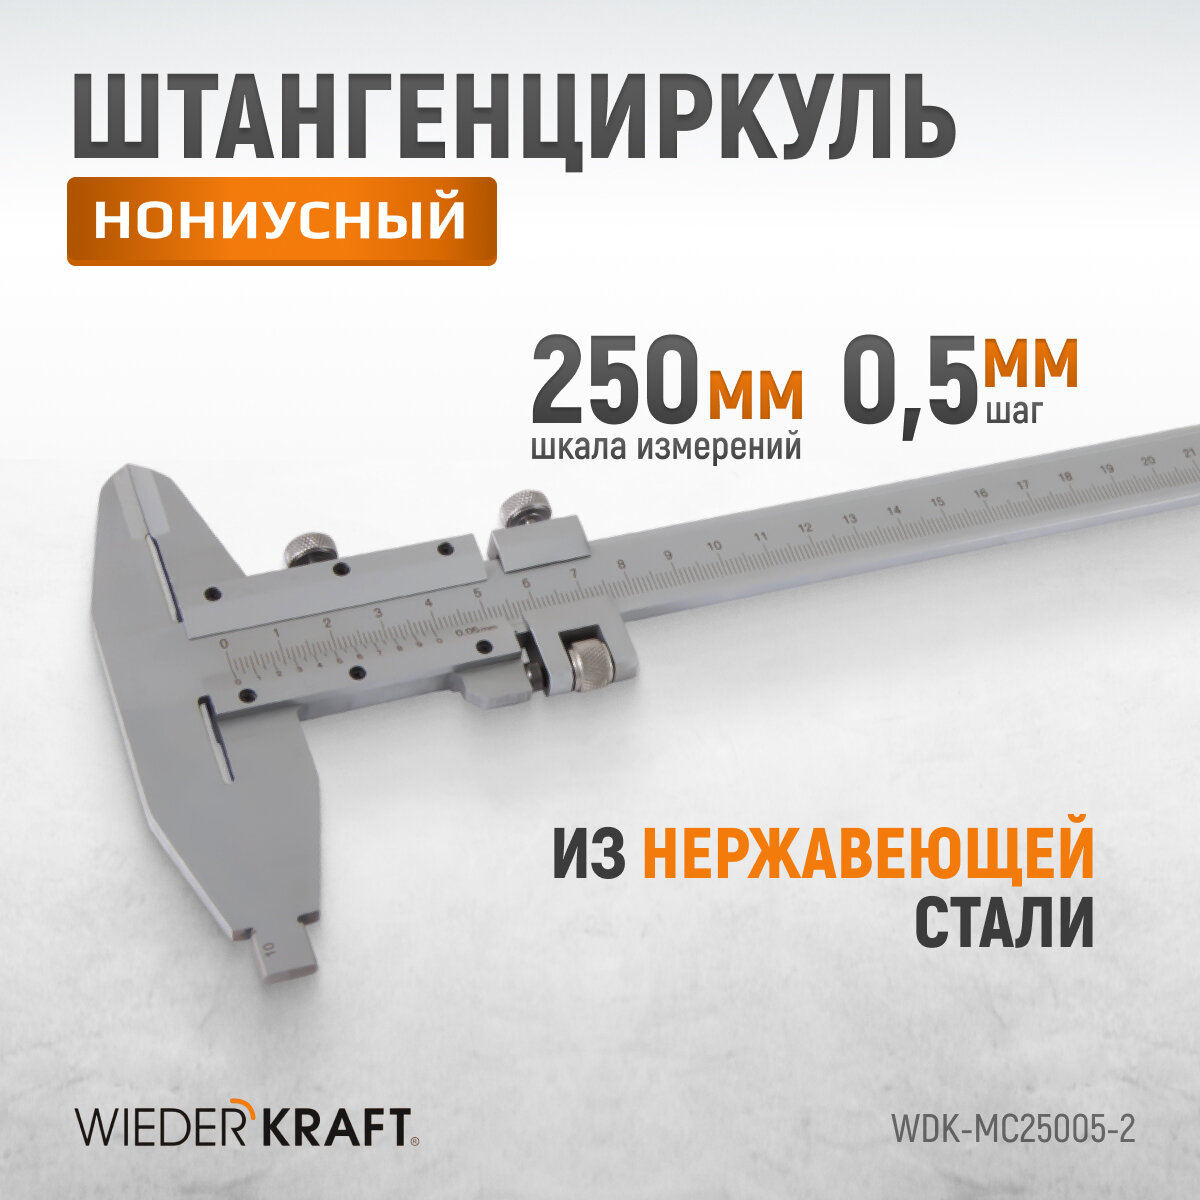 Штангенциркуль WIEDERKRAFT нониусный 0-250 мм, 0,05 мм, тип II, ГОСТ 166-89 WDK-MC25005-2